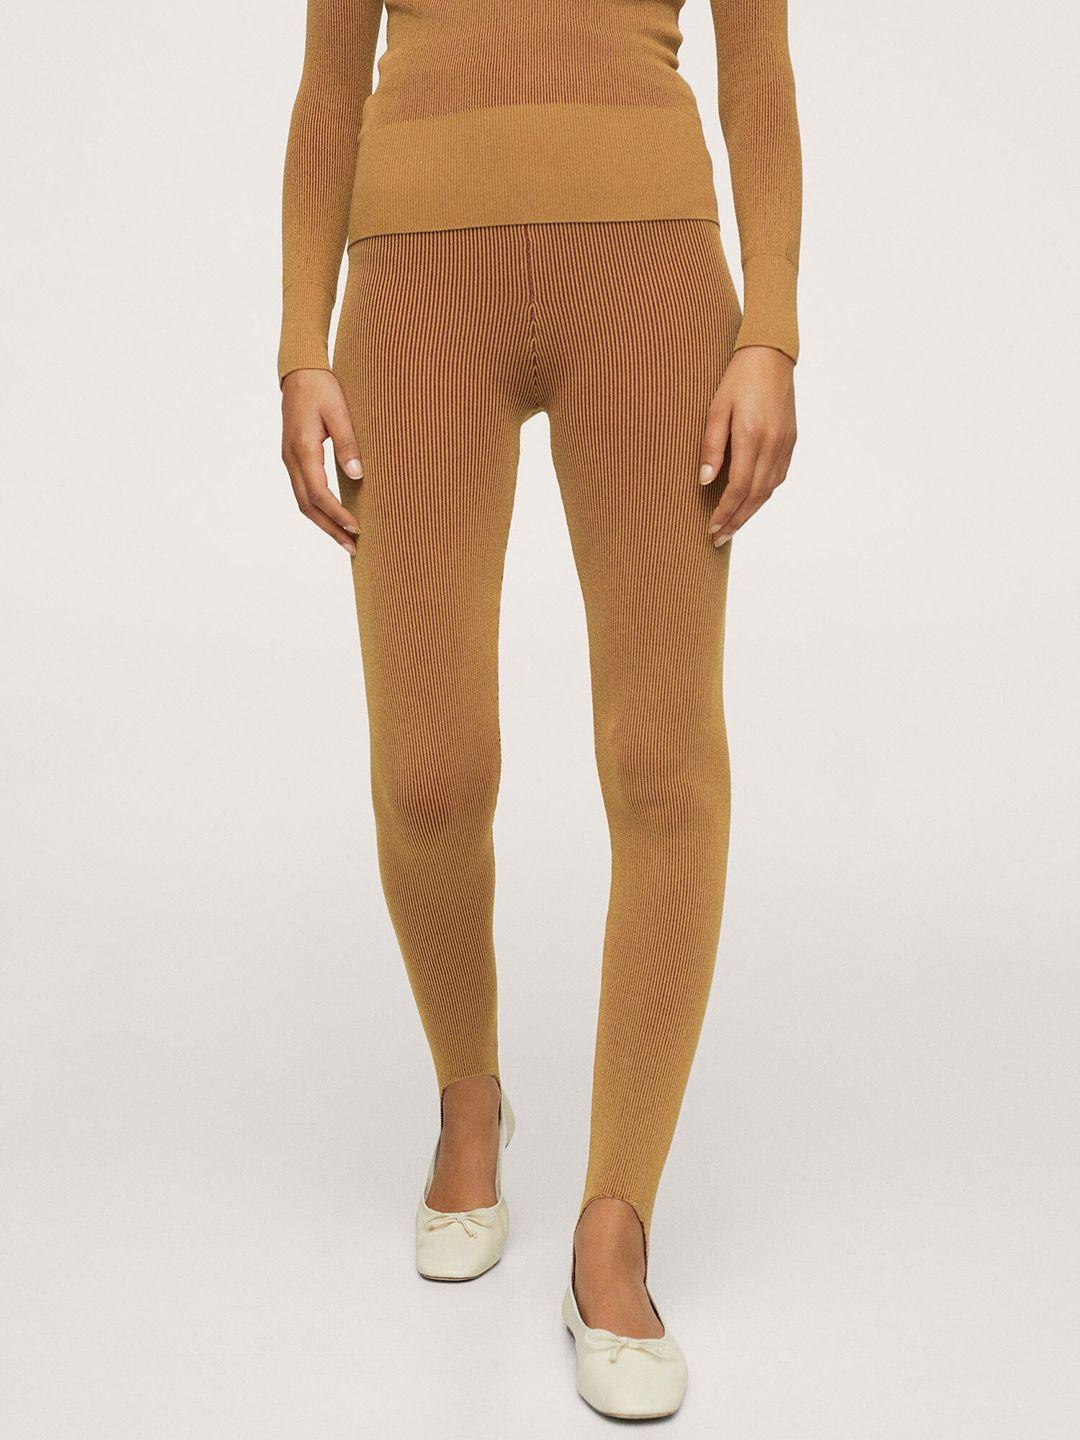 mango women brown ribbed leggings with foot strap detail